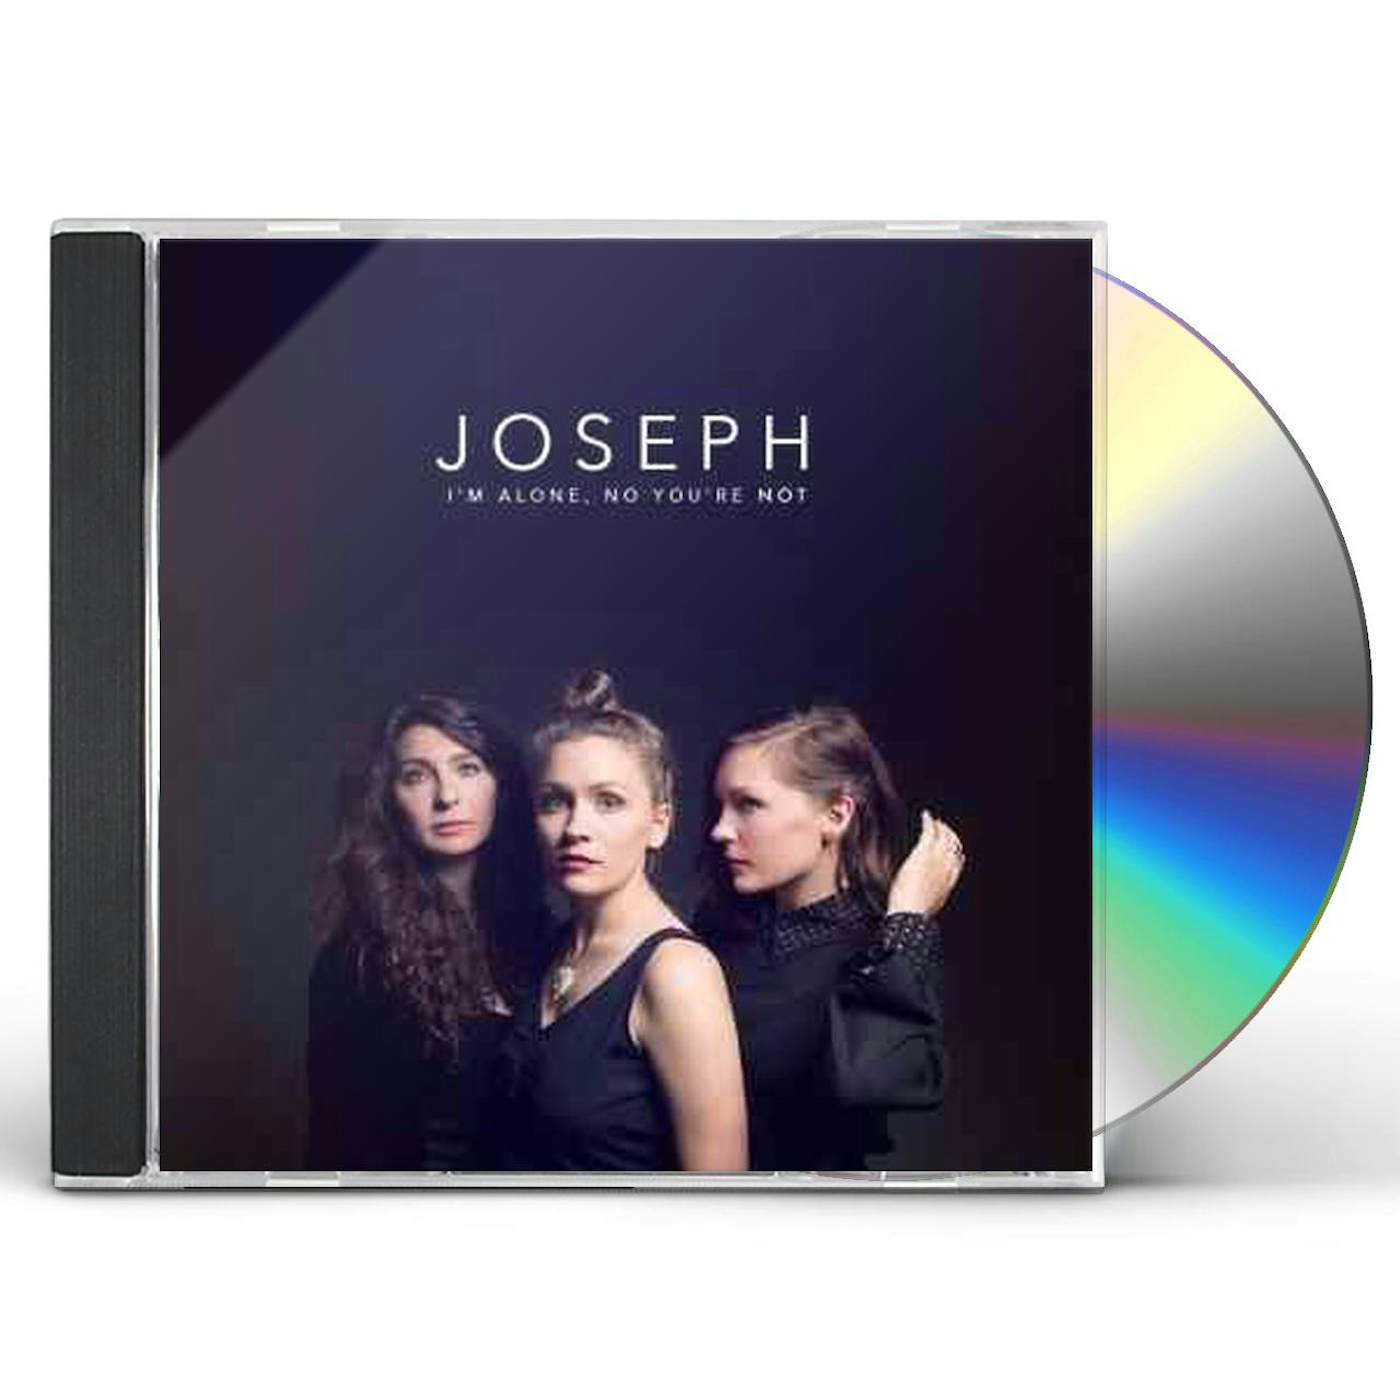 JOSEPH I'M ALONE NO YOU'RE NOT CD